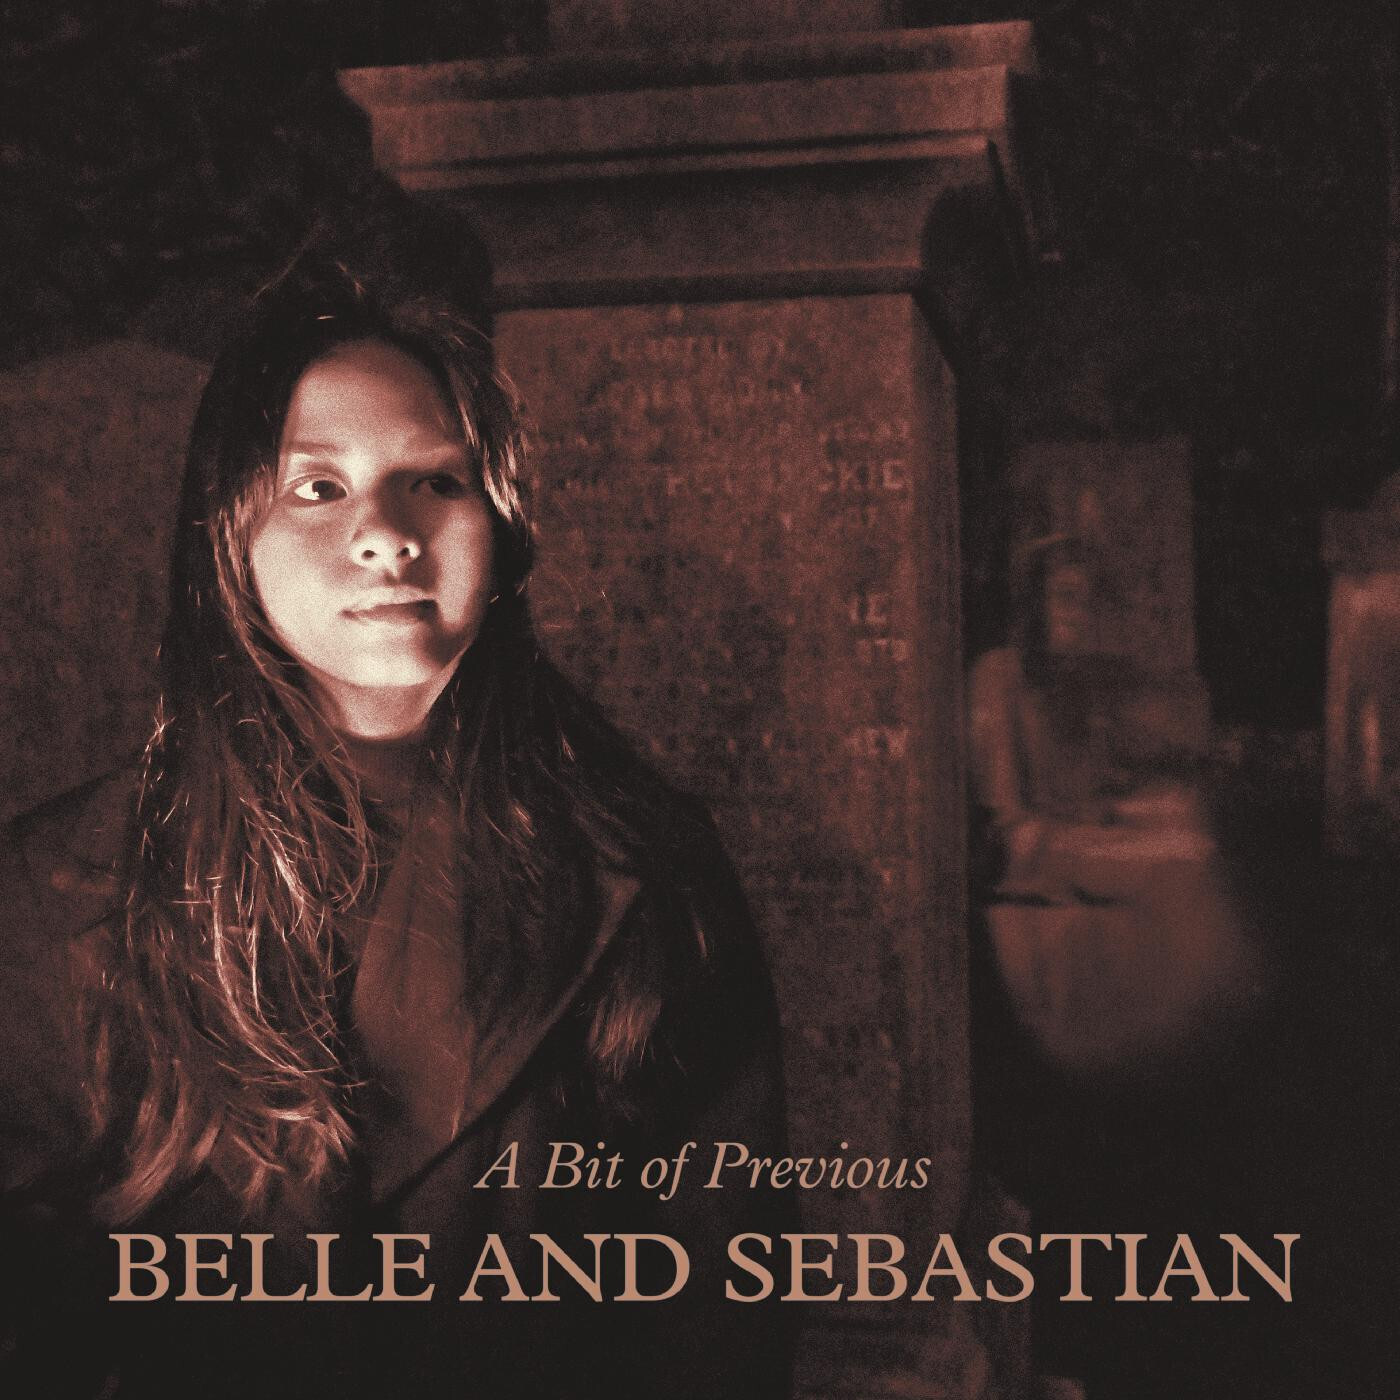 Belle & Sebastian "A Bit of Previous"